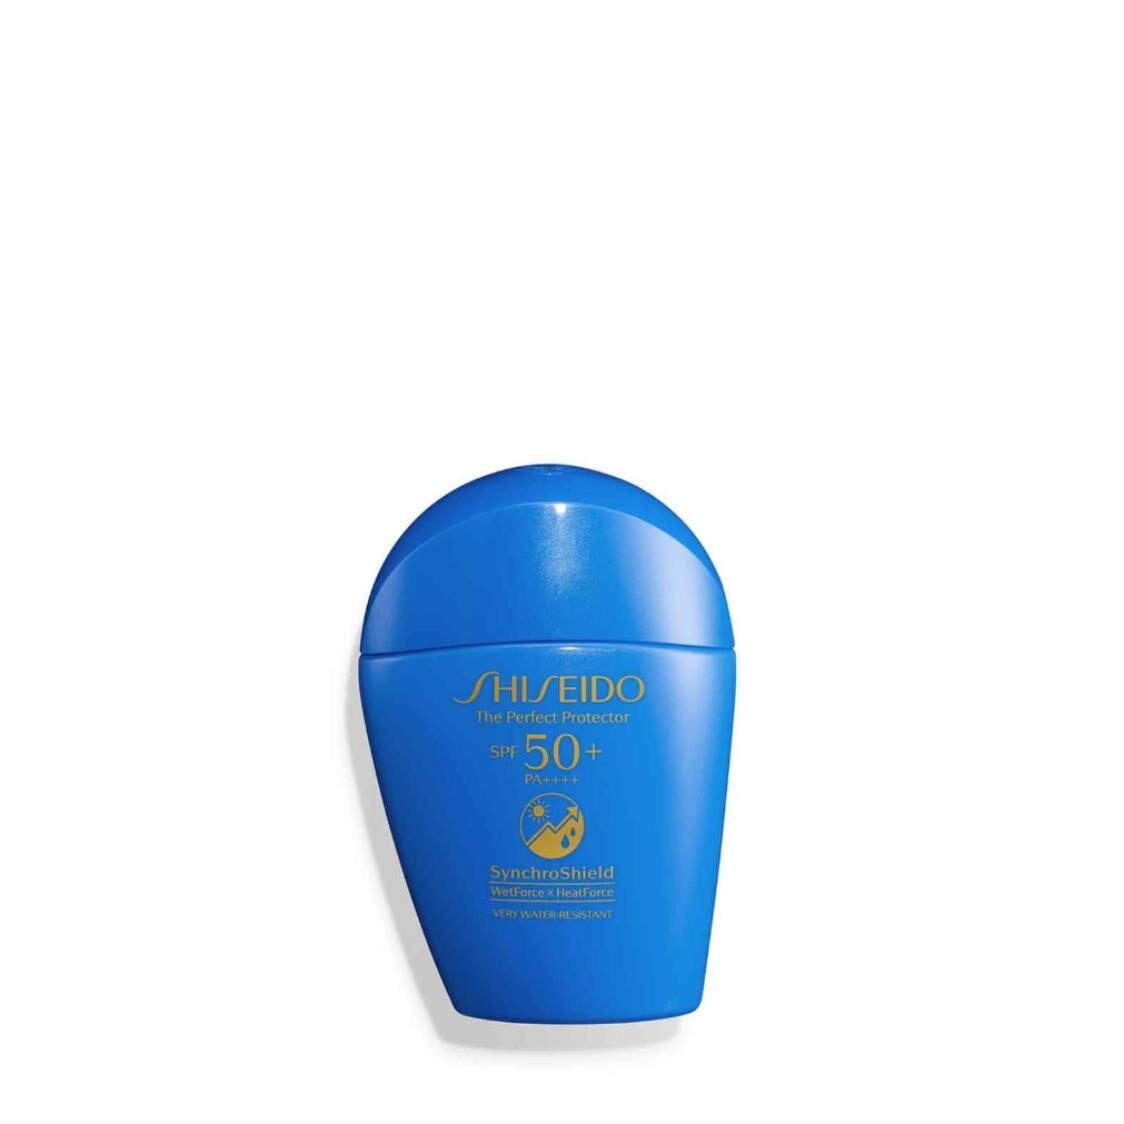 Shiseido Global Suncare The Perfect Protector SPF 50 PA